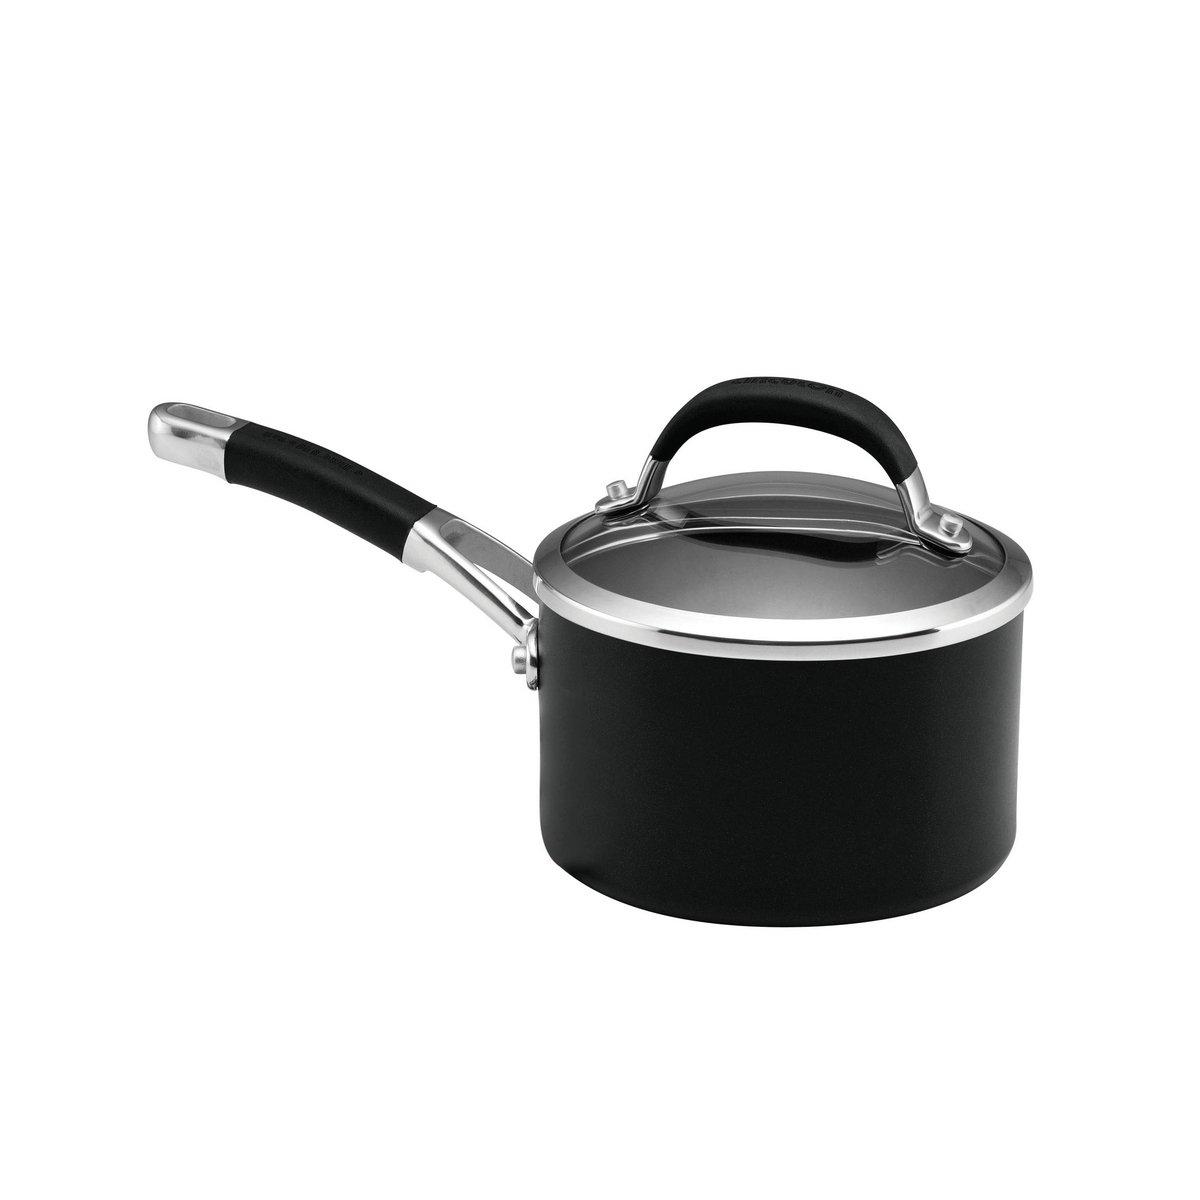 Black 'Premier Professional' Round Non Stick Cookware Saucepan - 16cm